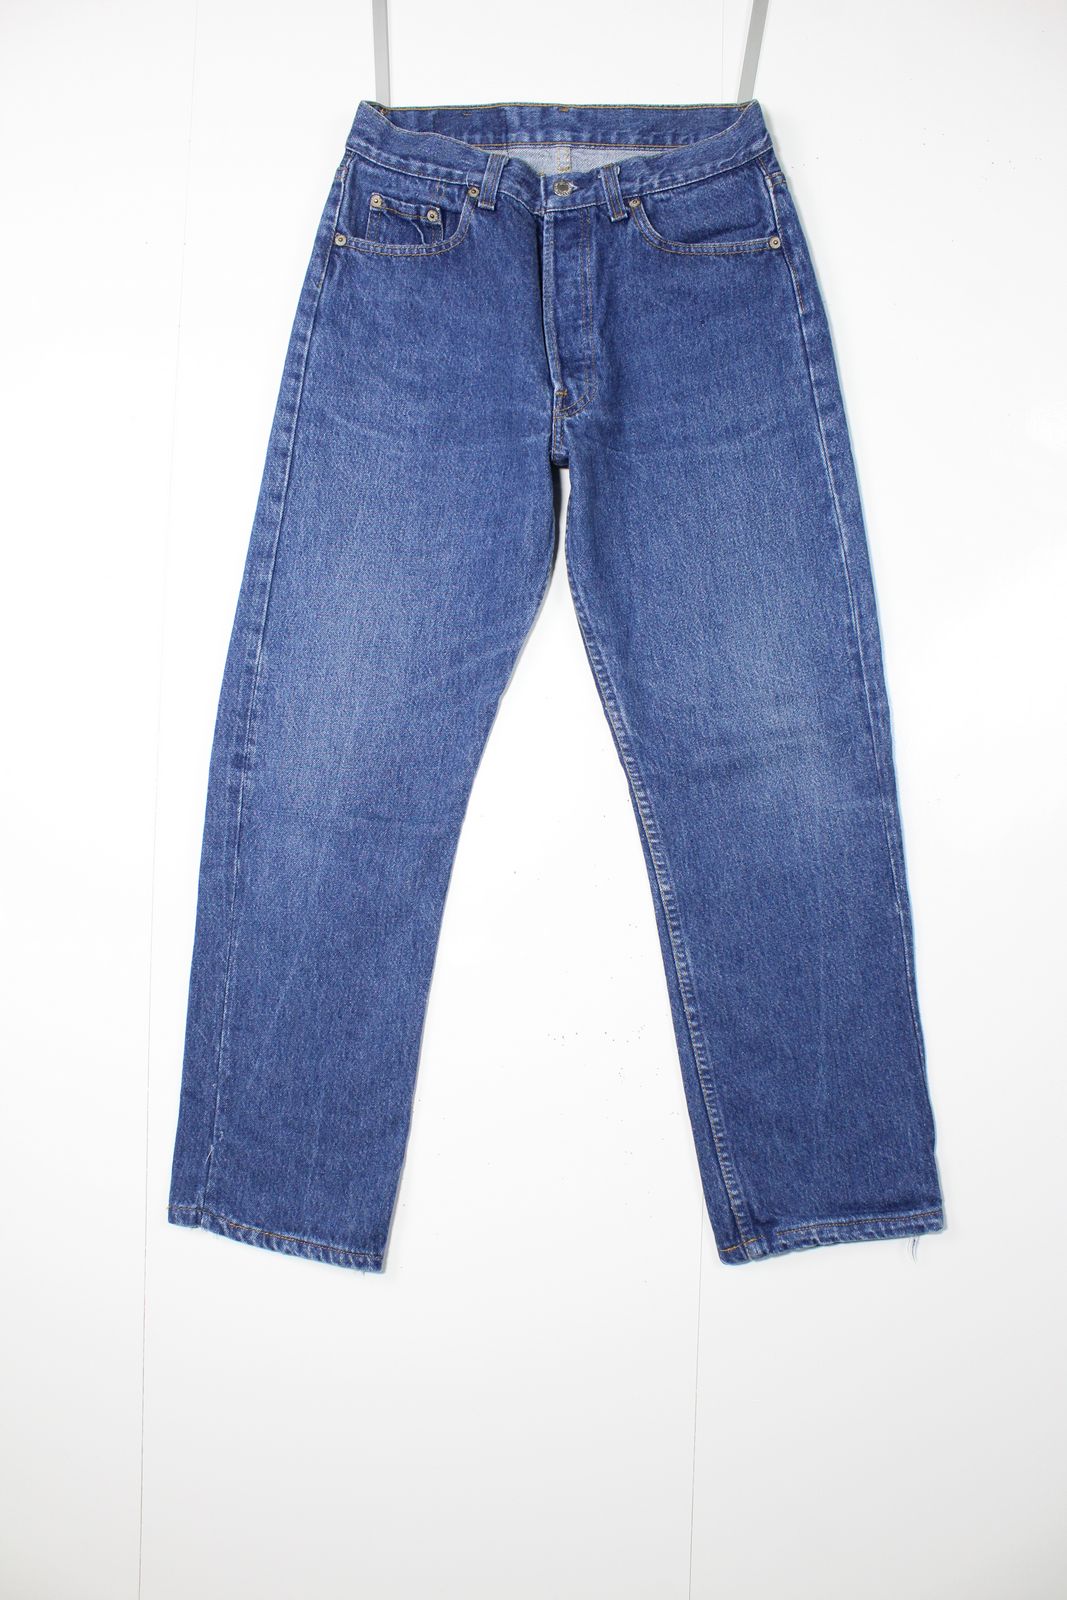 Levi's 501 Denim W30 L30 Made In USA Jeans Vintage